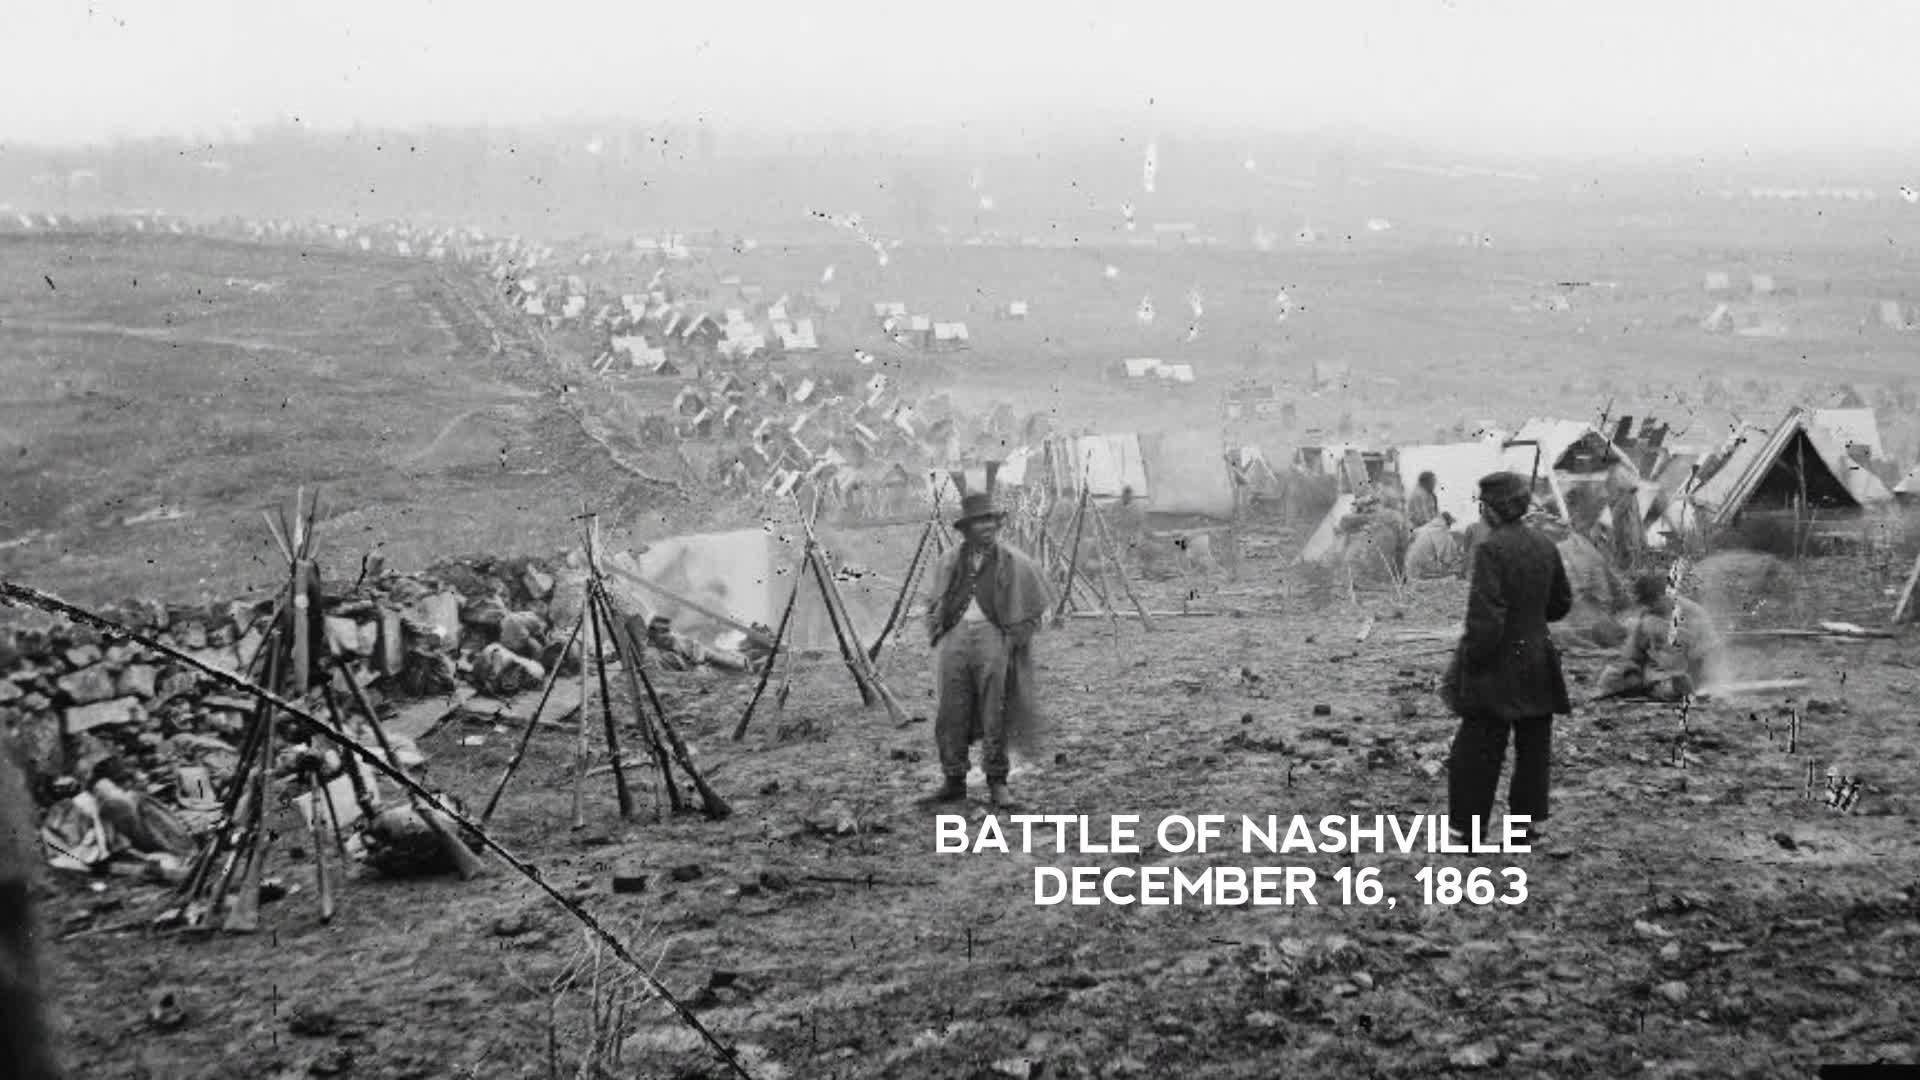 The history of Nashville